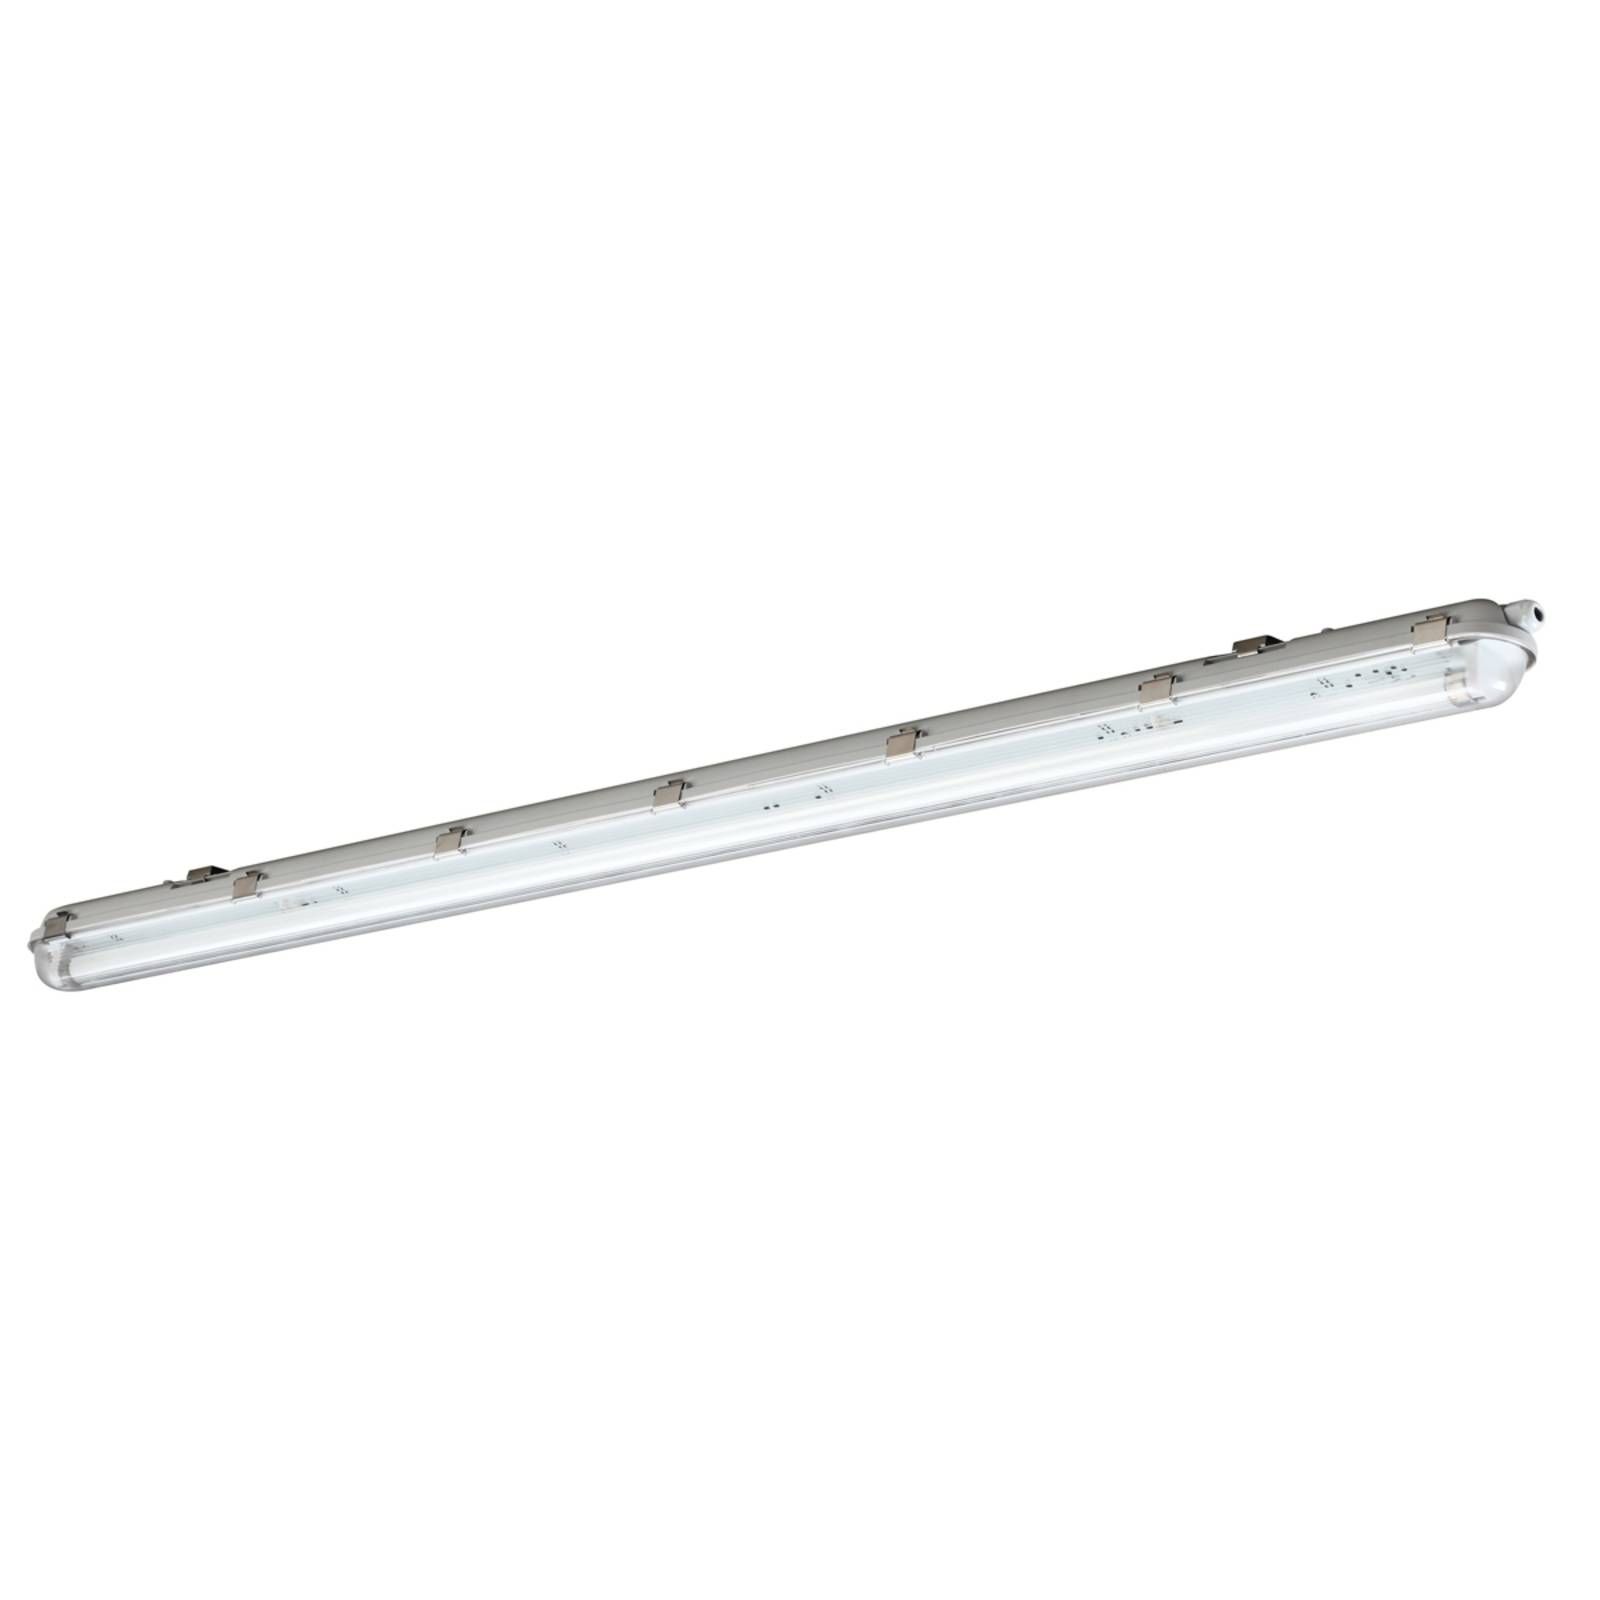 Müller-Licht Aquaslim LED stropná lampa vlhký priestor 150cm, plast, G13, 22W, P: 150 cm, L: 6.7 cm, K: 7.2cm